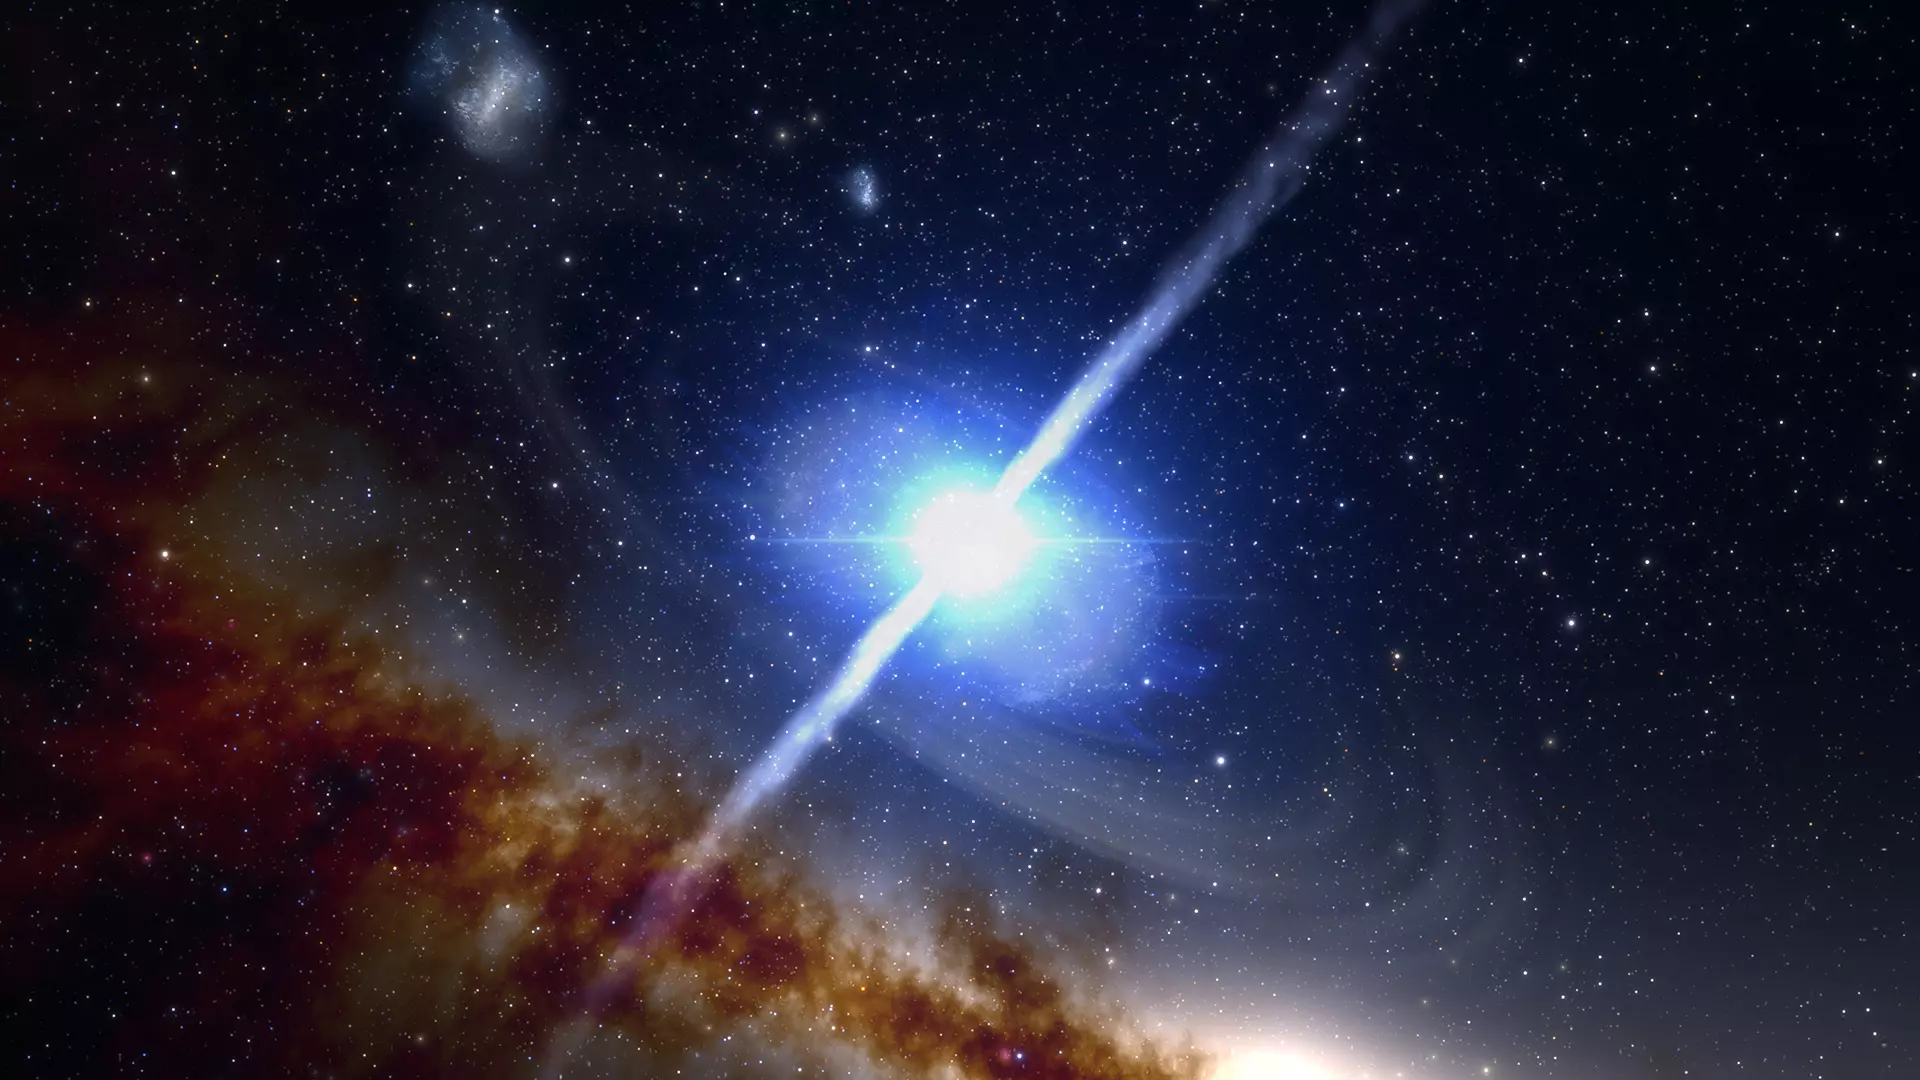 impresión artística ilustra la fusión de dos estrellas de neutrones, que produce un evento notablemente breve (de 1 a 2 segundos), pero intensamente poderoso, conocido como breve estallido de rayos gamma.